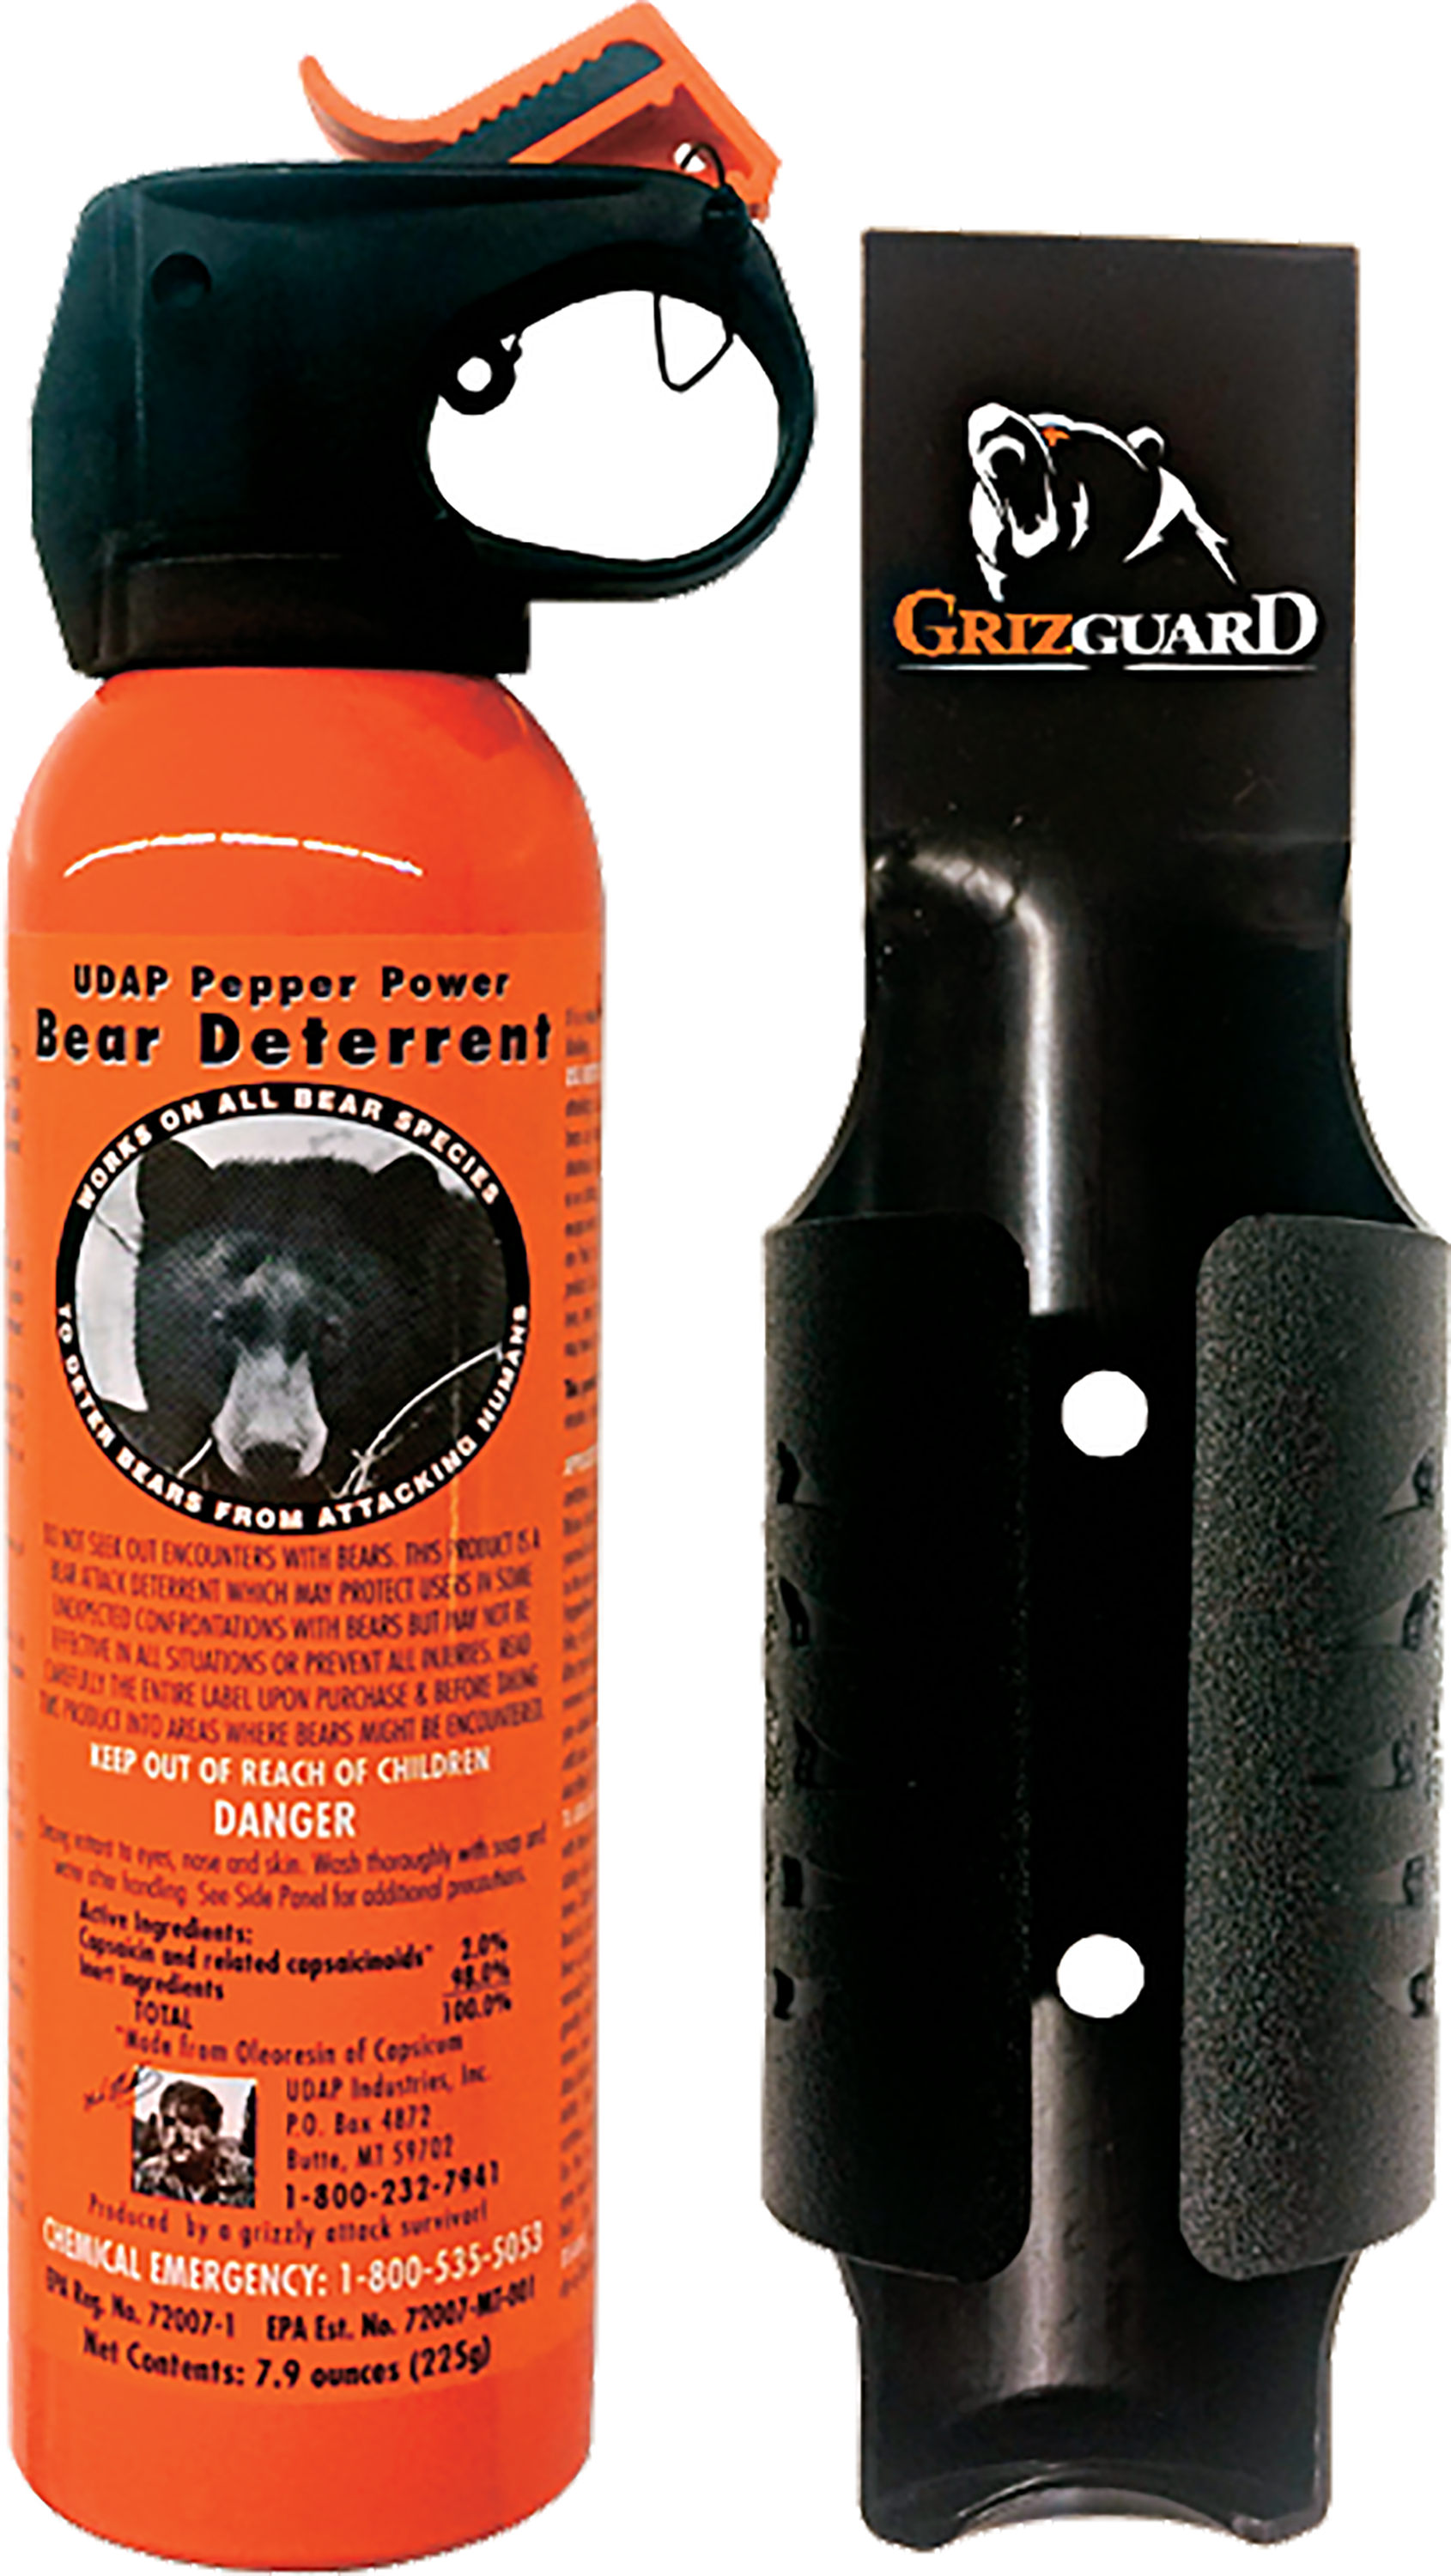 UDAP Pepper Power Safety Orange Bear Spray with Griz Guard Holster